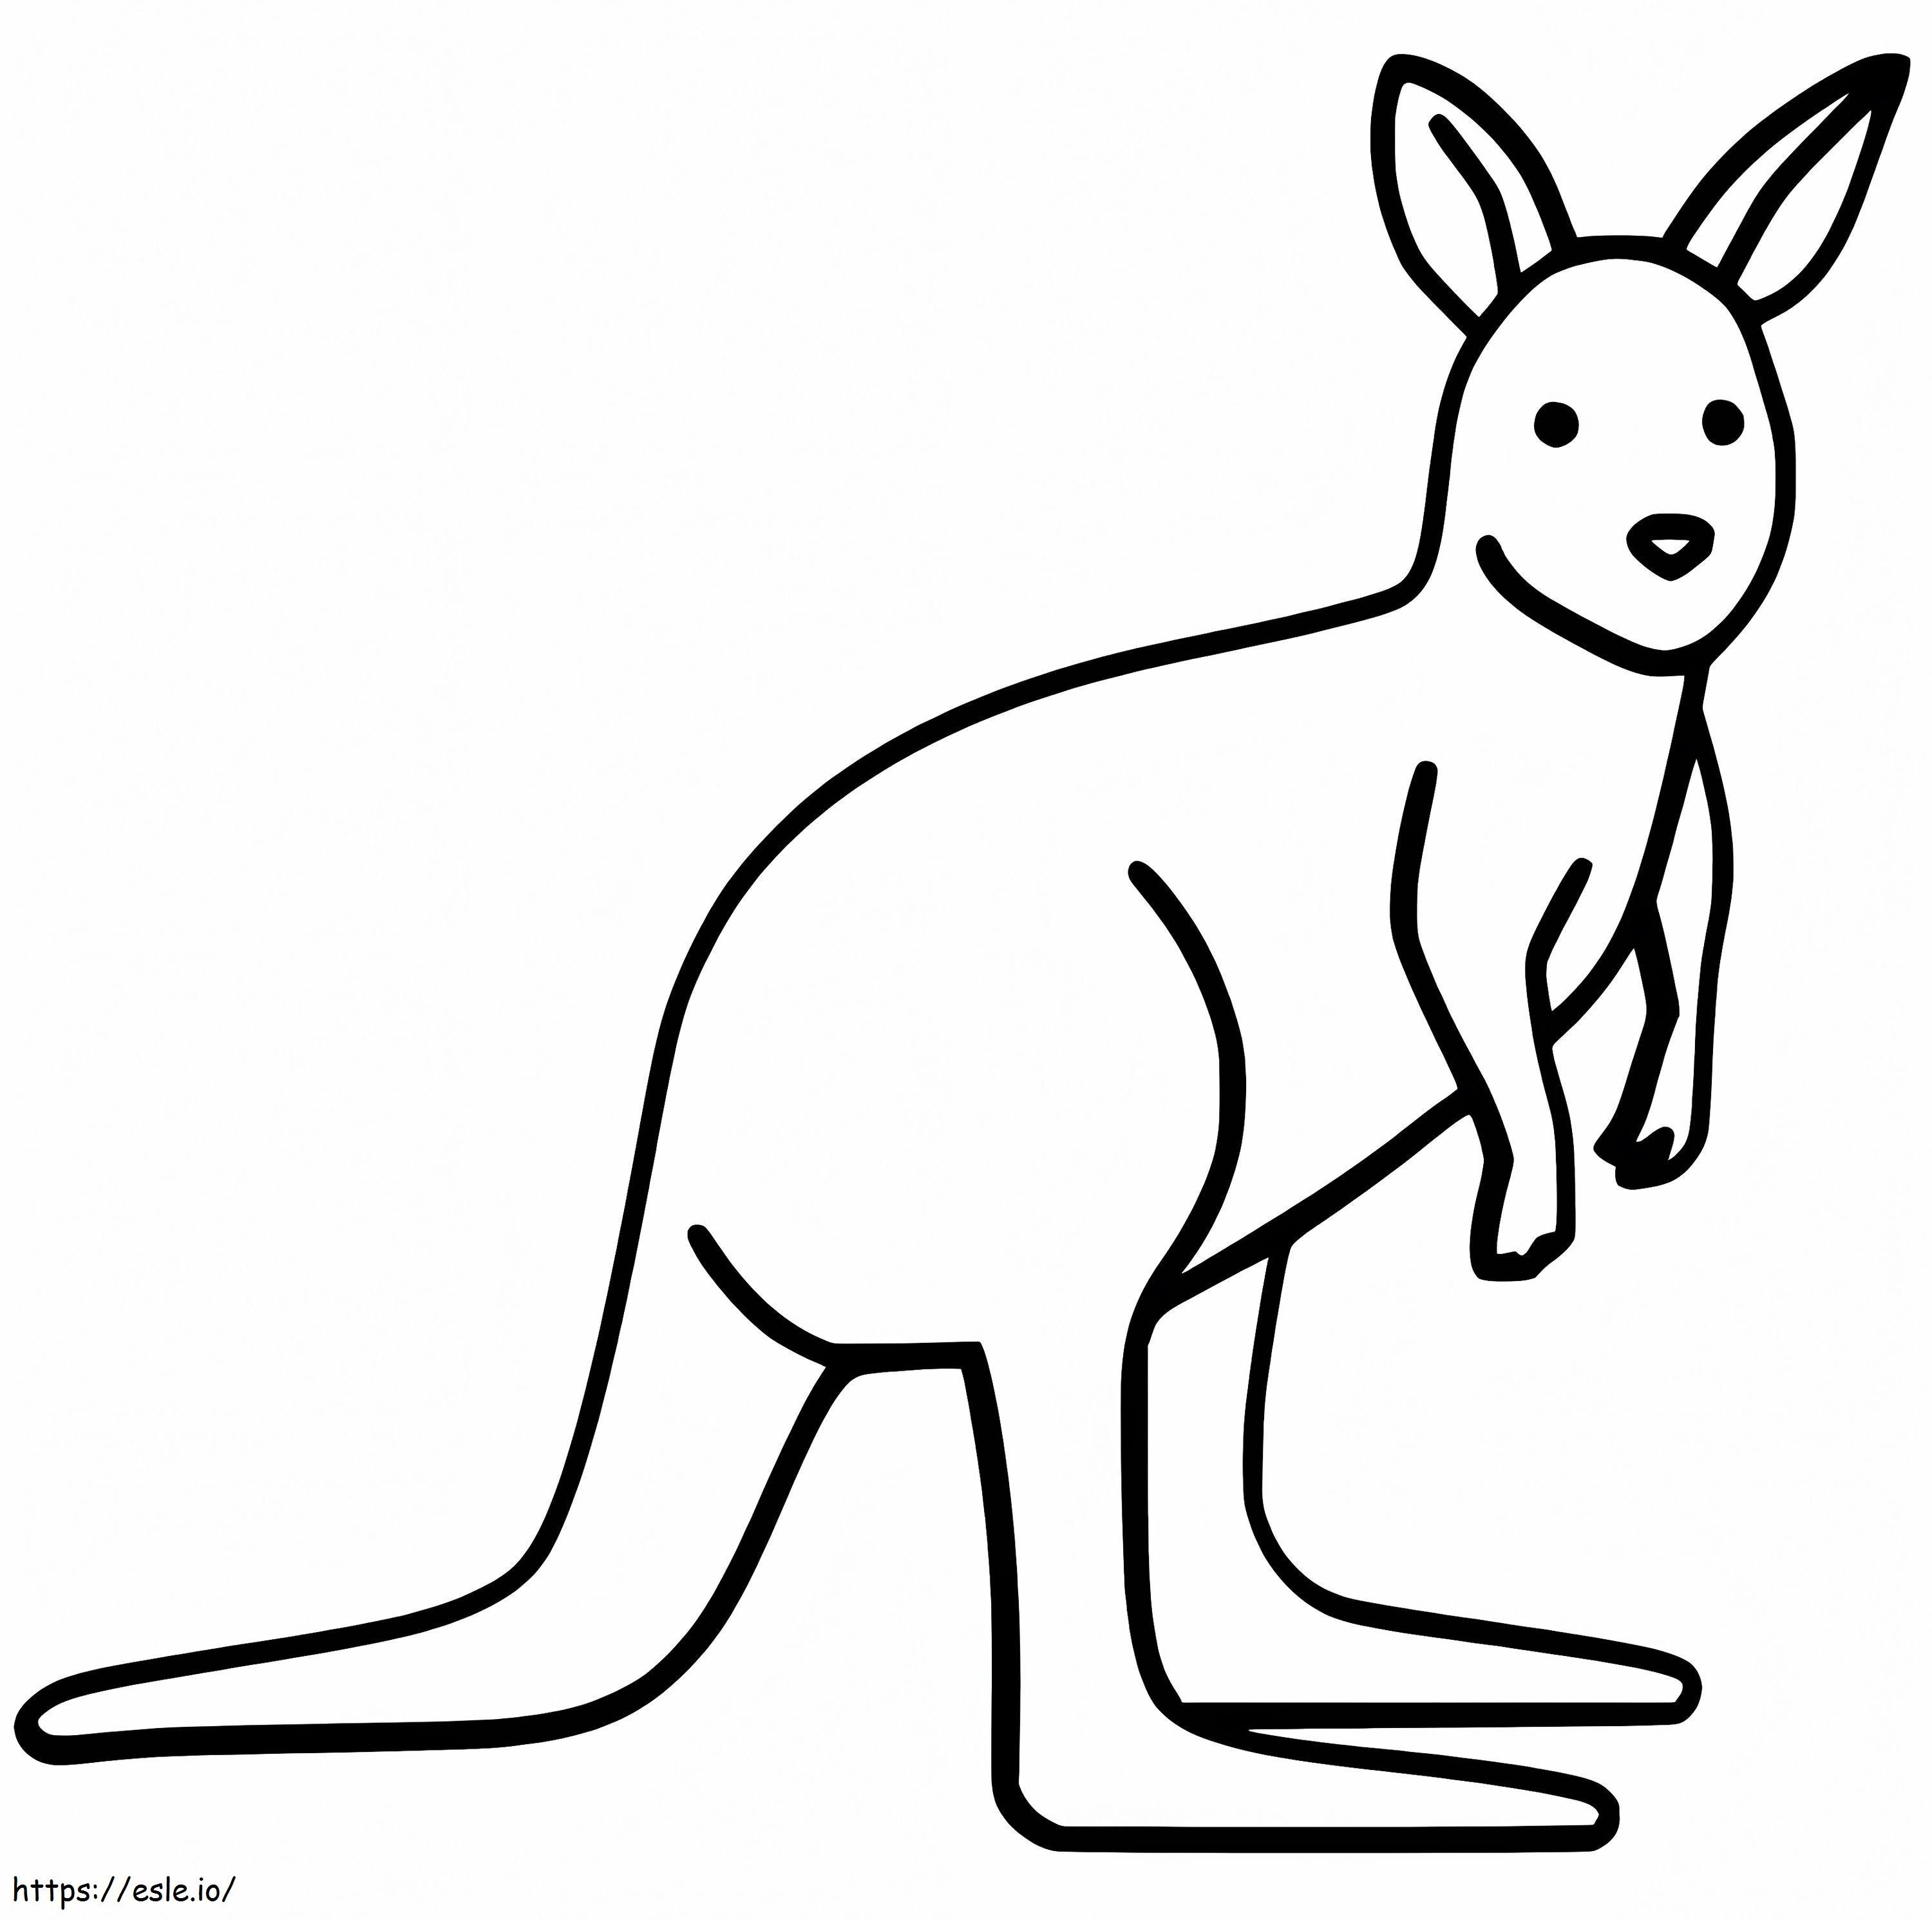 Printable Wallaby coloring page